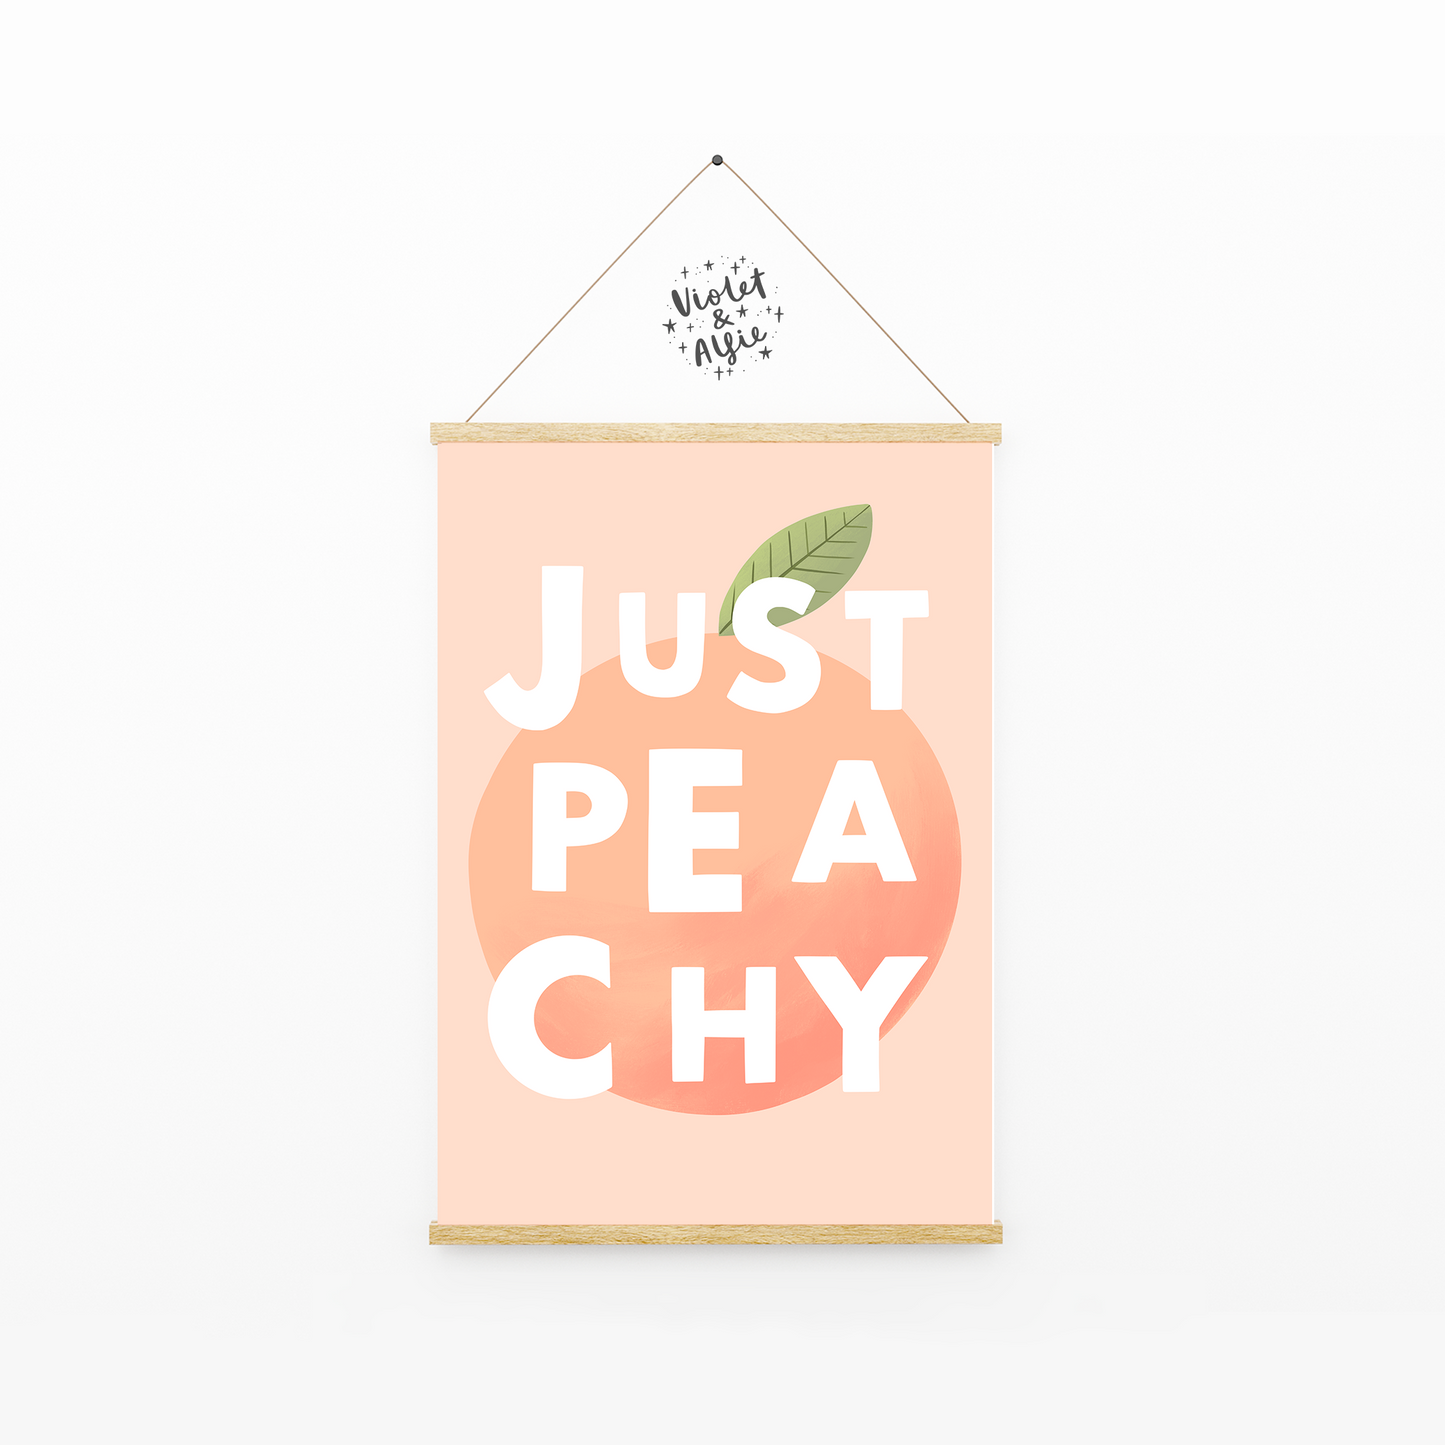 Just Peachy Print, peach illustration, peach prints, typographic word art, kitchen art, peach decor, fruit print, peach illustration, prints for kitchen, prints for bedroom, positive wall art